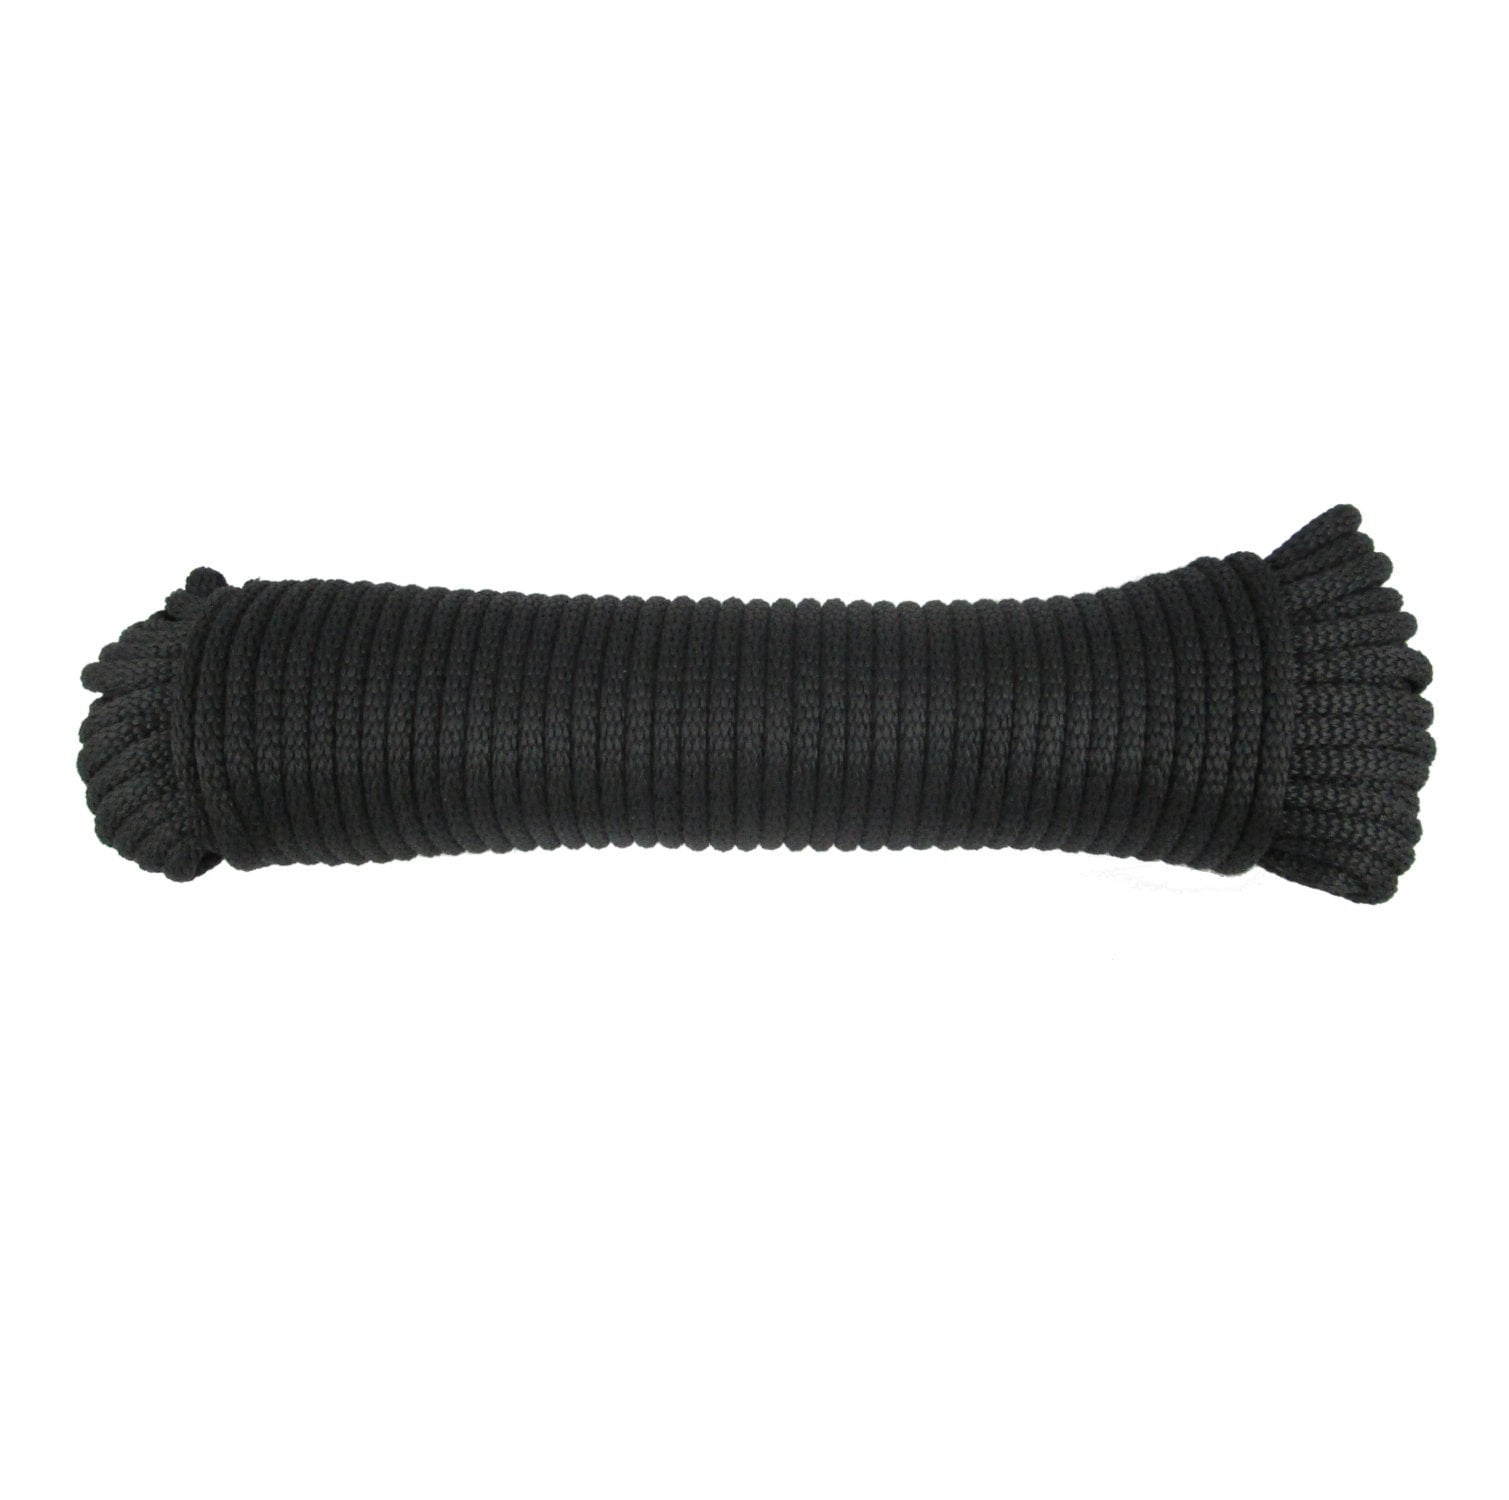 Solid Braid Nylon Rope - 1/4 Inch x 100 Feet - Black